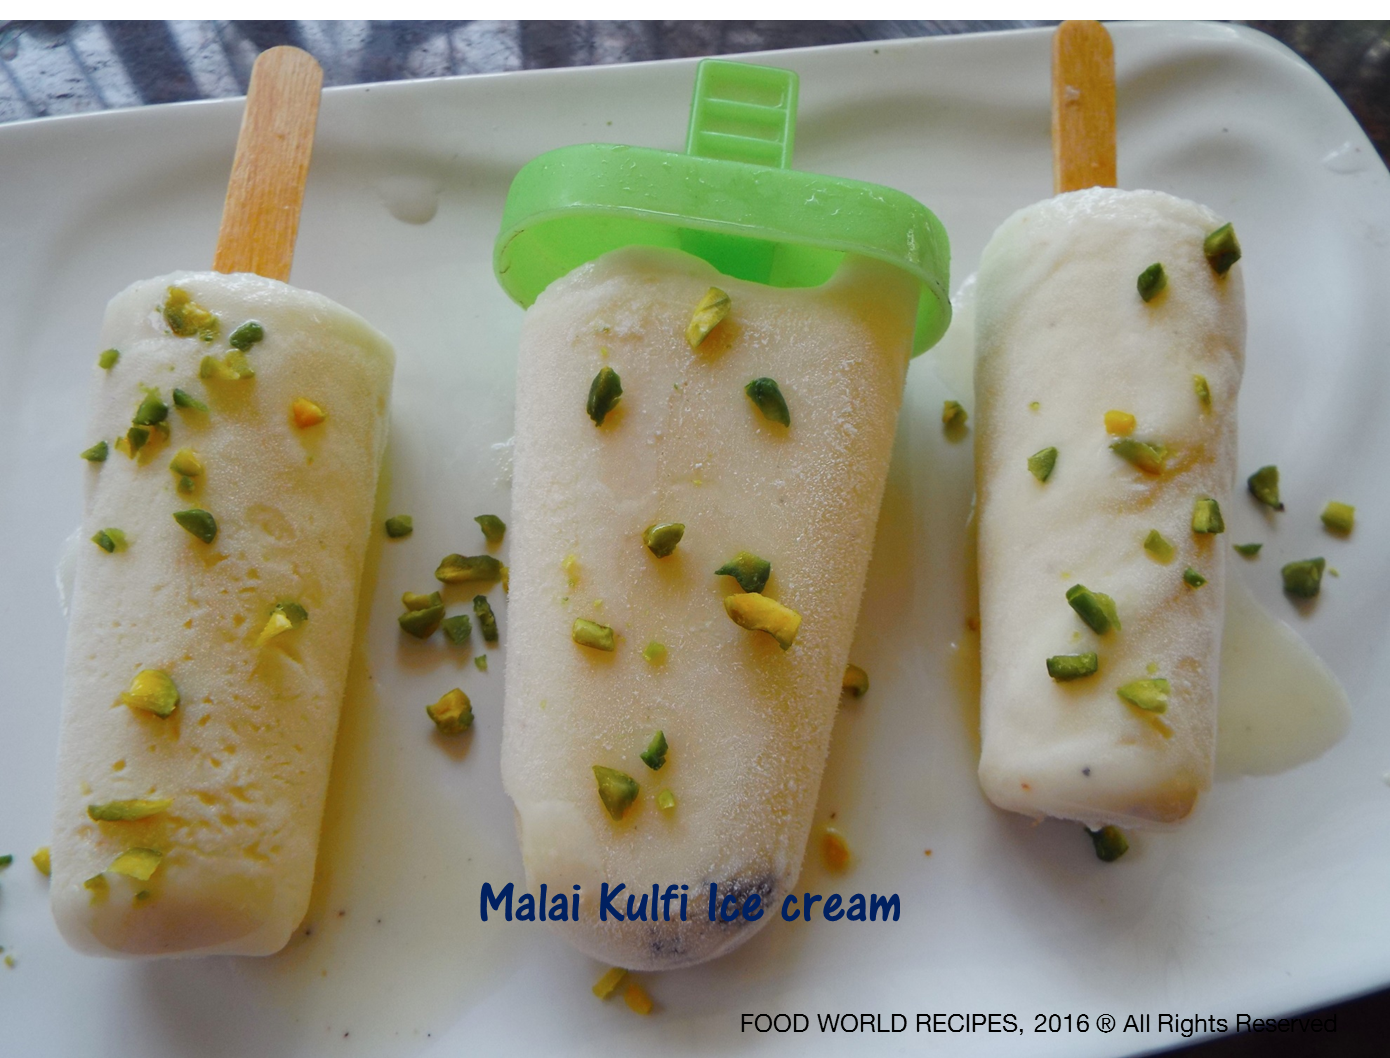 Malai Kulfi Ice cream